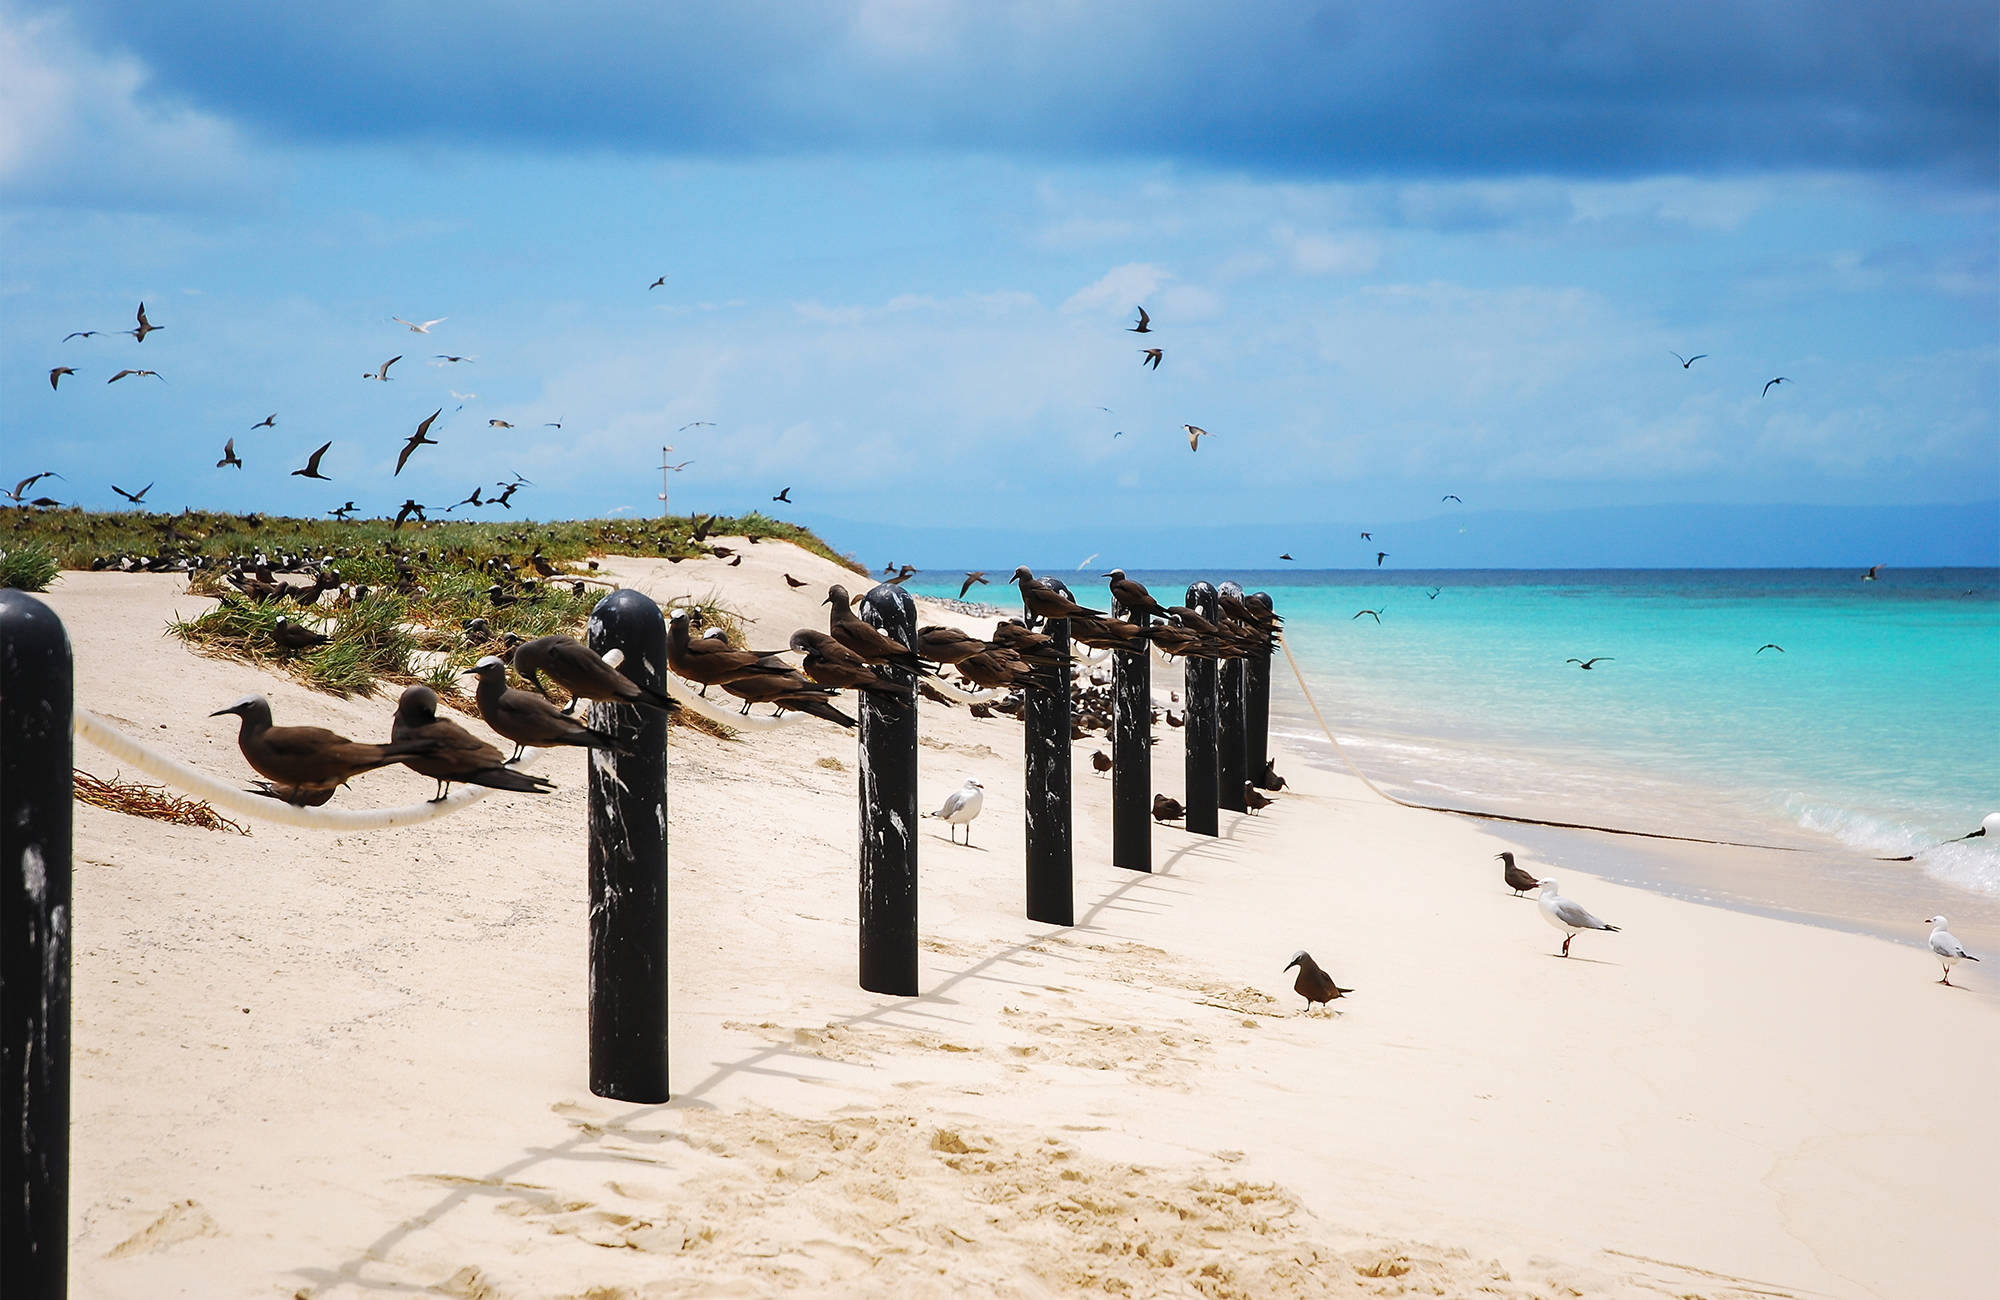 cairns-australia-birds-sitting-rope-beach-cover